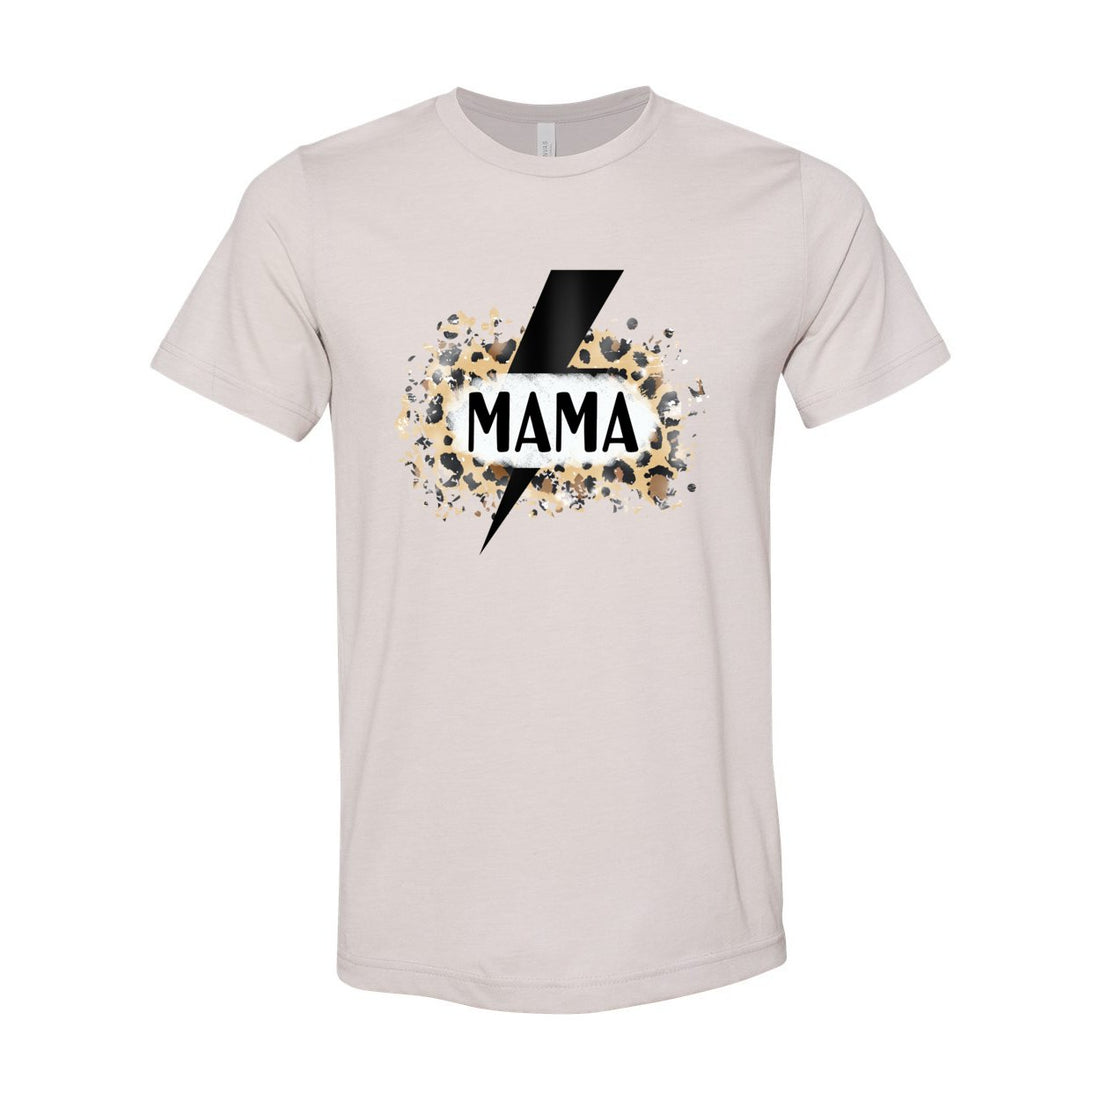 Mama Lighting Bolt Short Sleeve Jersey Tee - T-Shirts - Positively Sassy - Mama Lighting Bolt Short Sleeve Jersey Tee